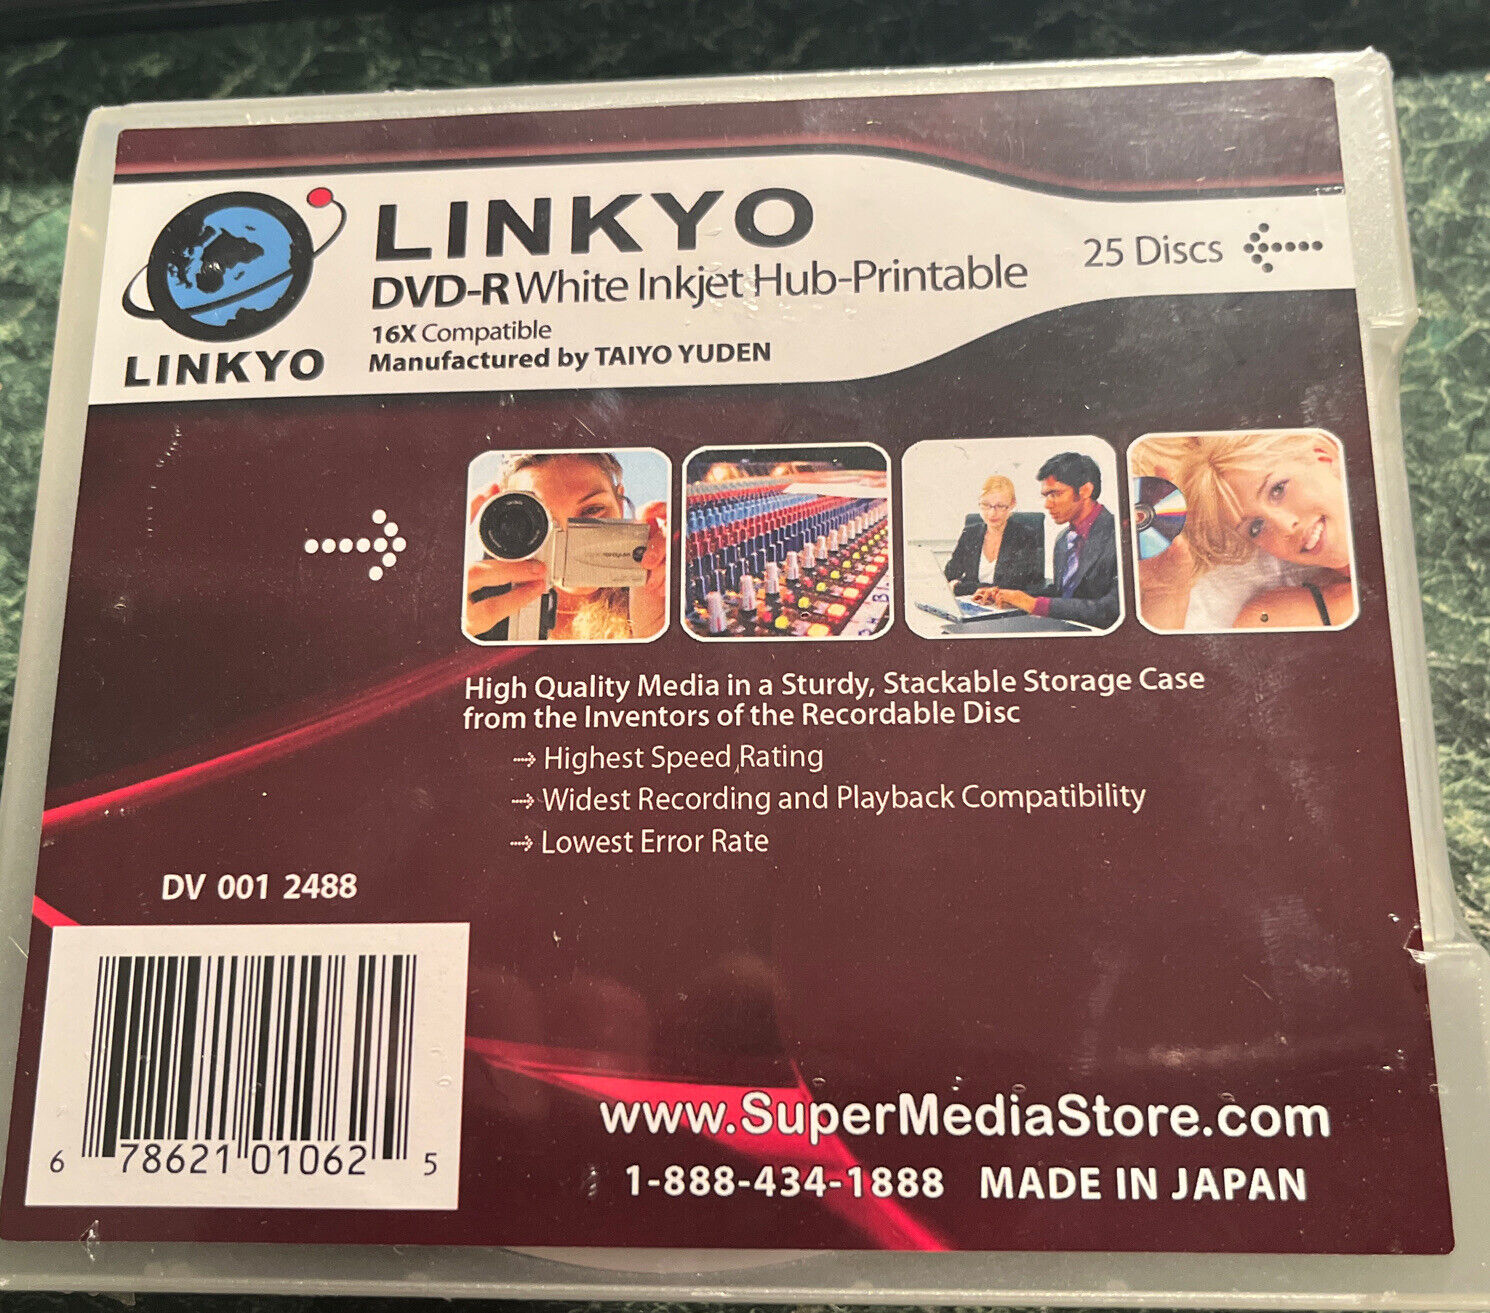 LINKYO DVD-R White Inkjet Hub-Printable - 25 Discs - 16X Compatible- DV0012488